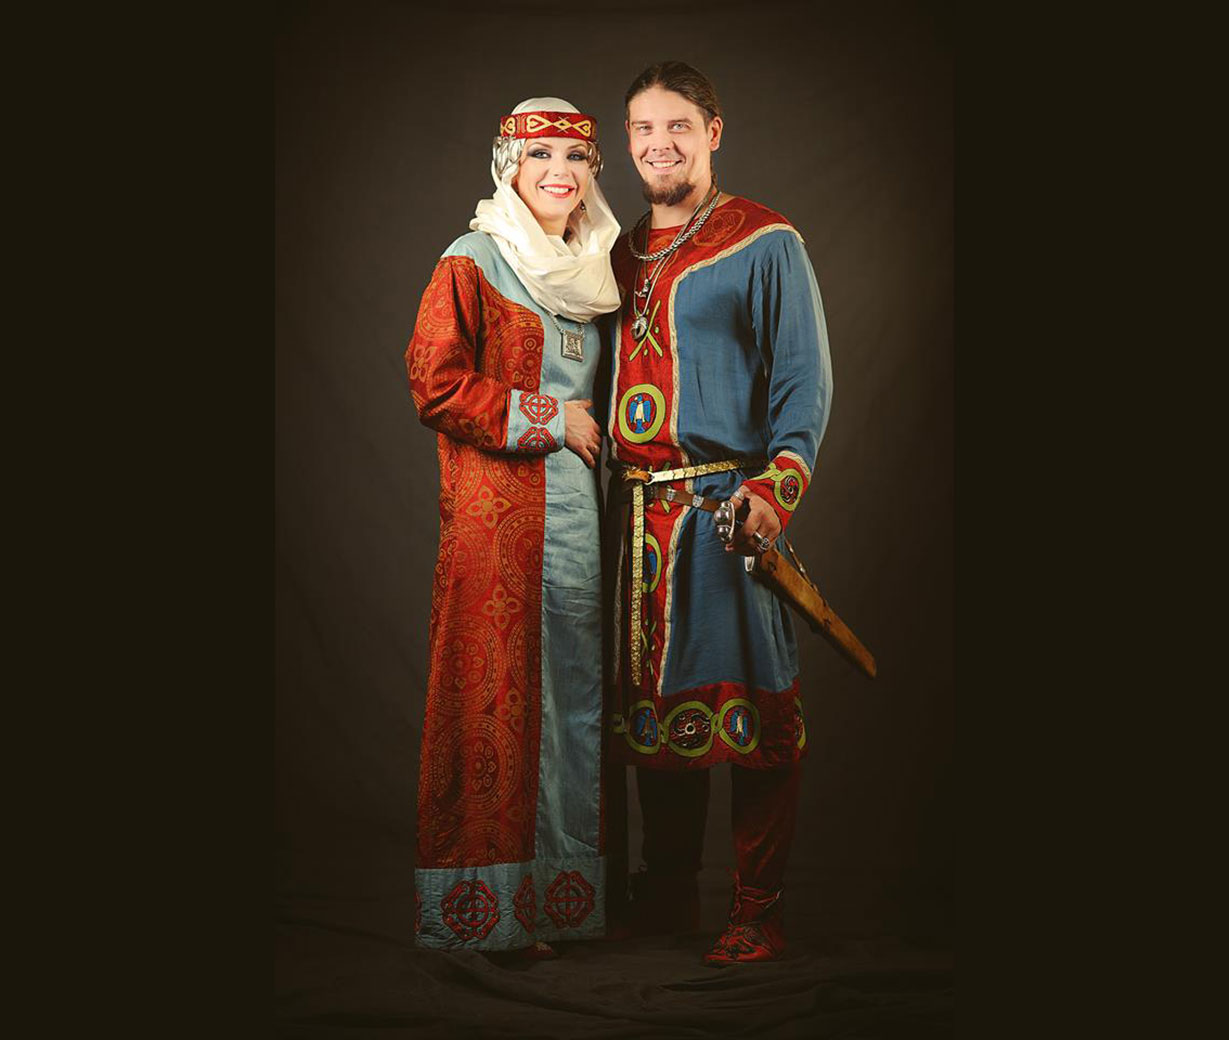 9th century Slavic clothing